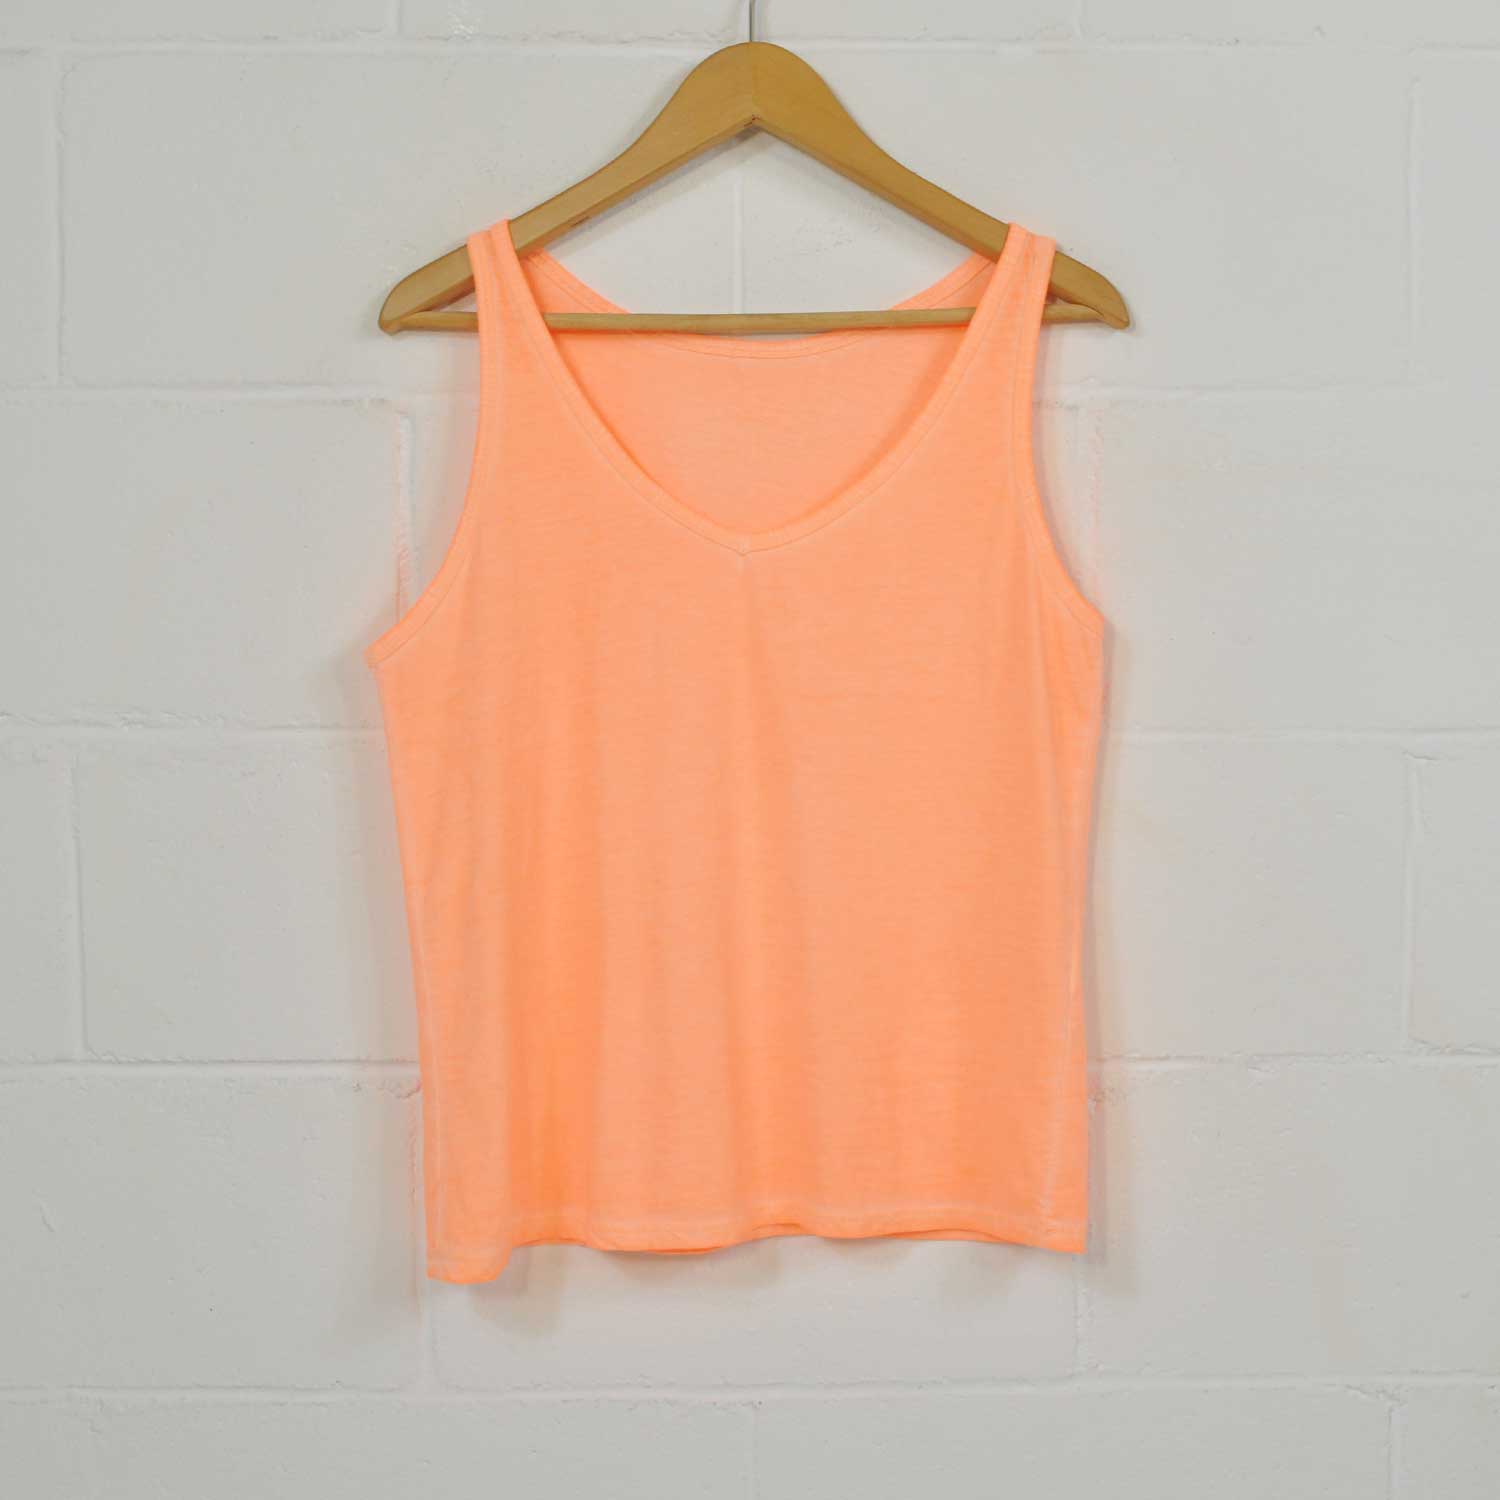 Camiseta tirantes naranja fluor